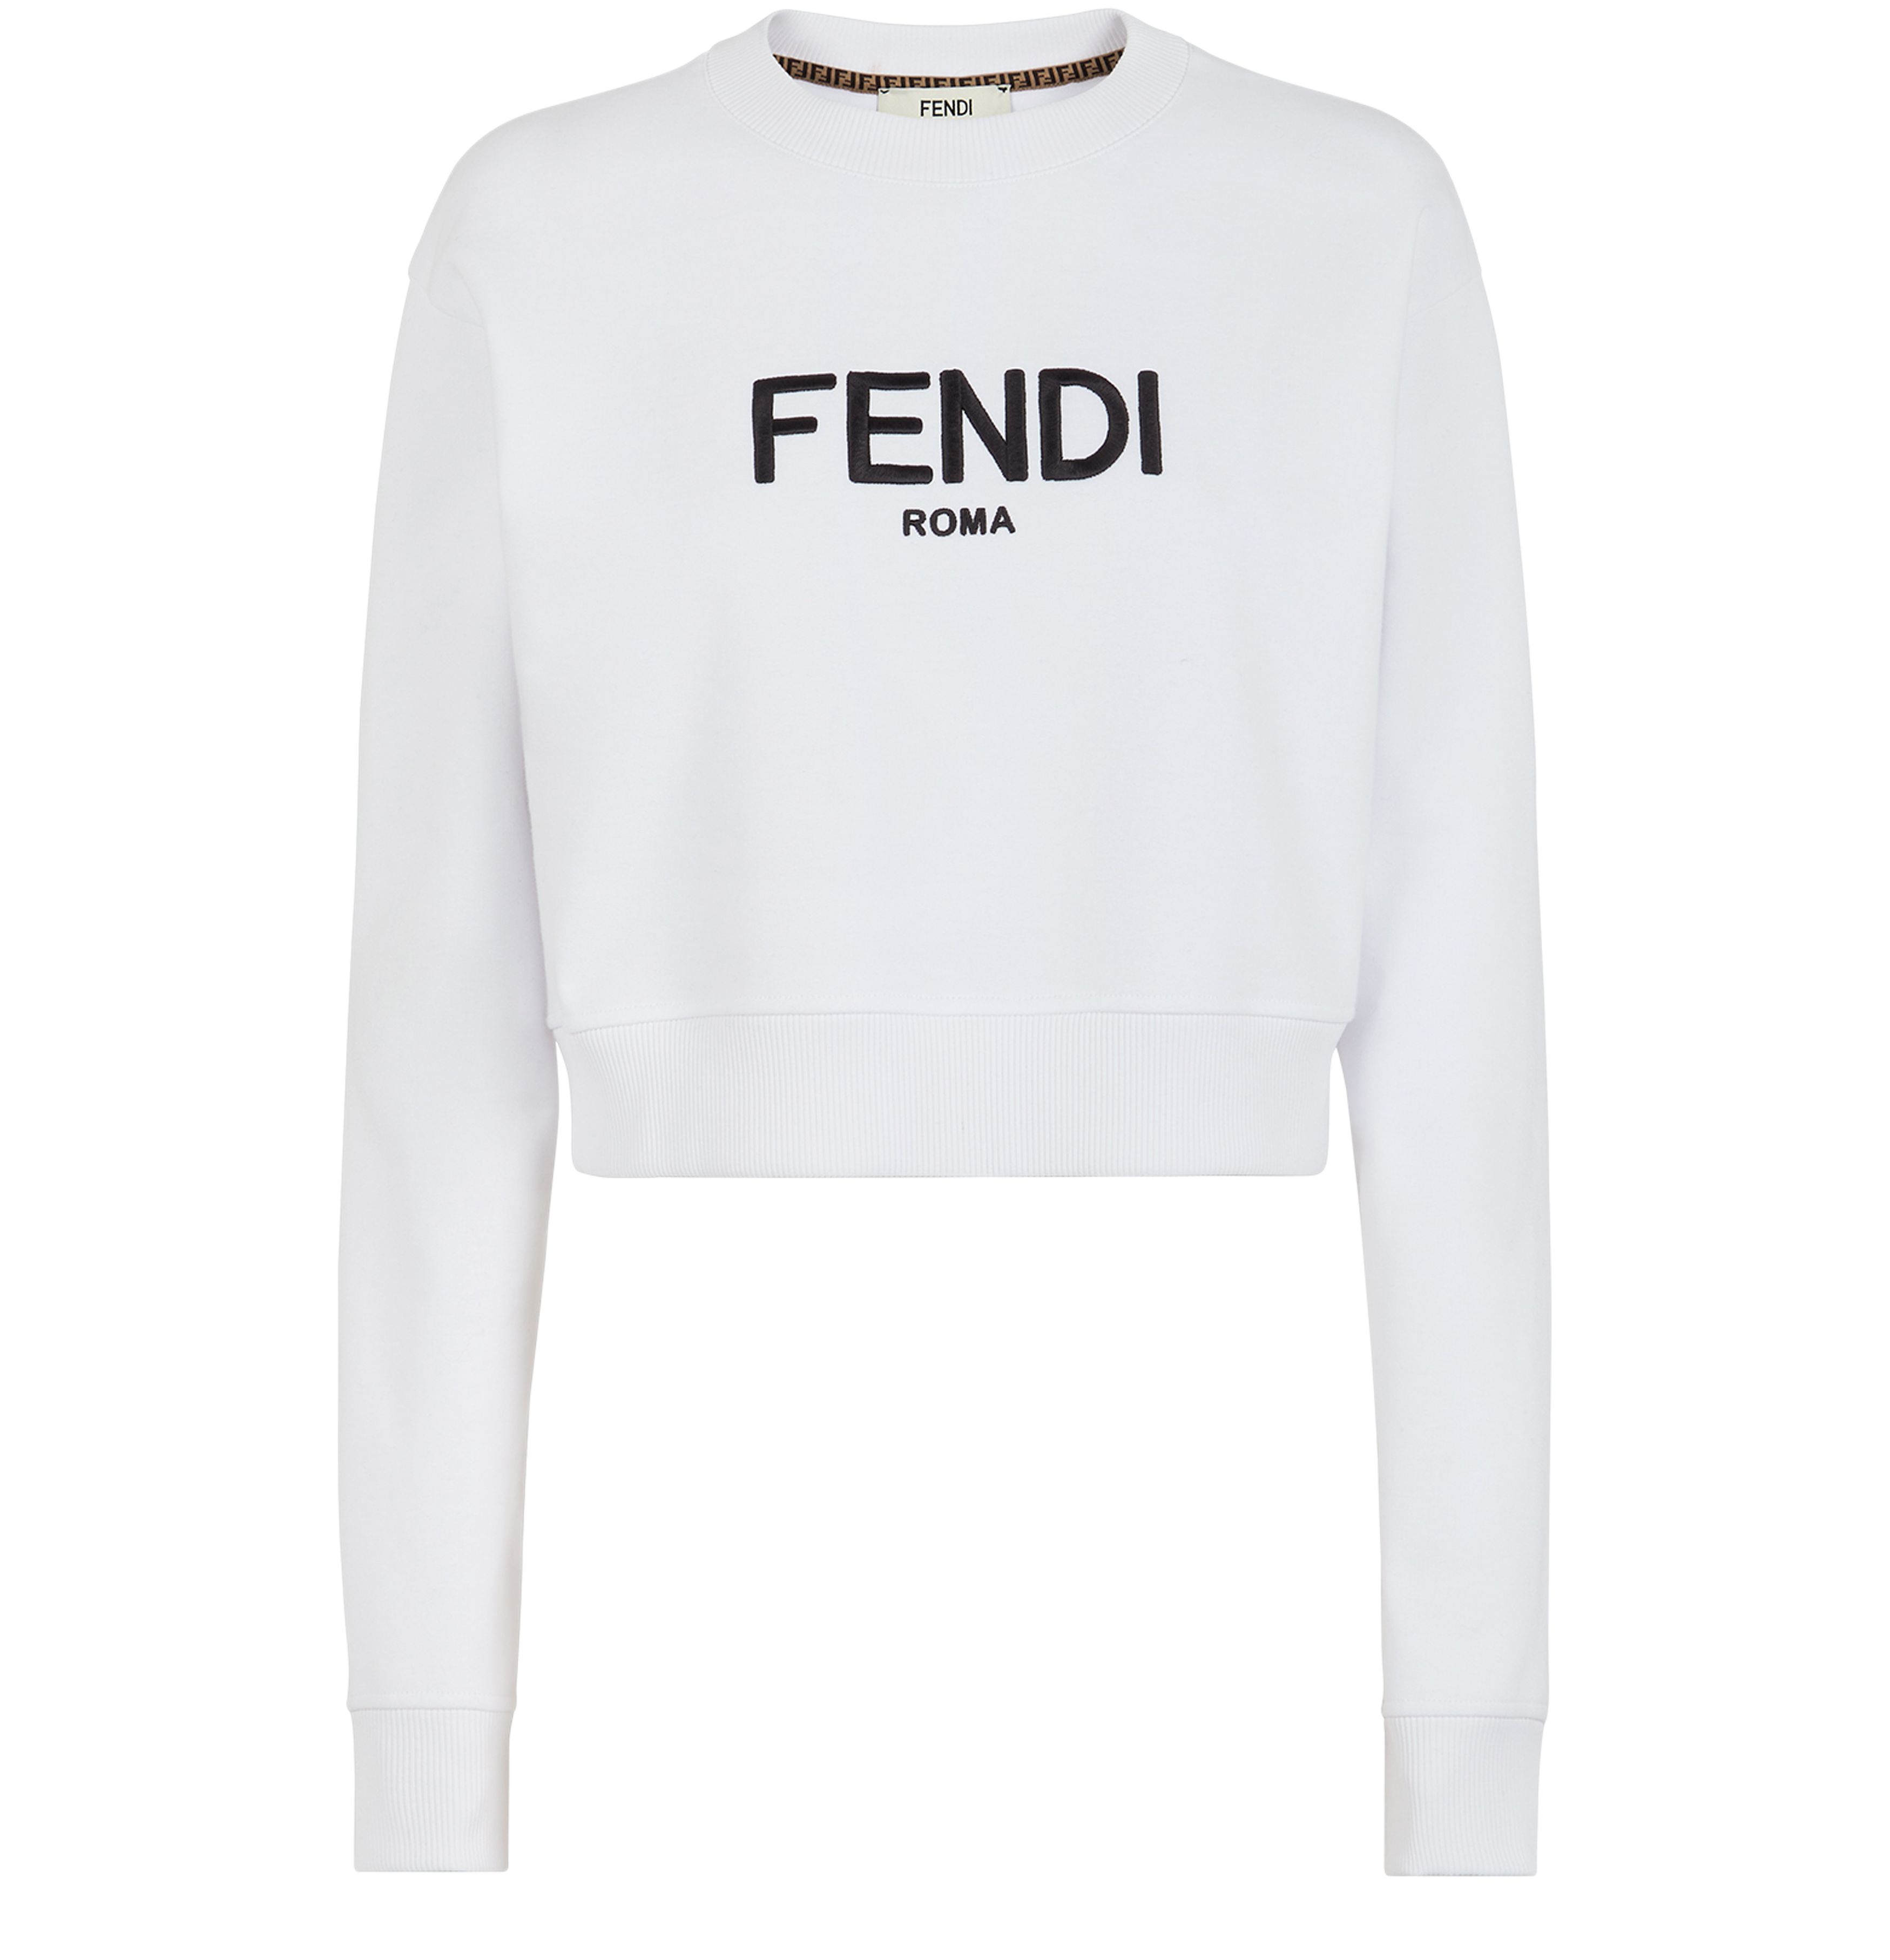 FENDI Cropped sweatshirt with a crew neck